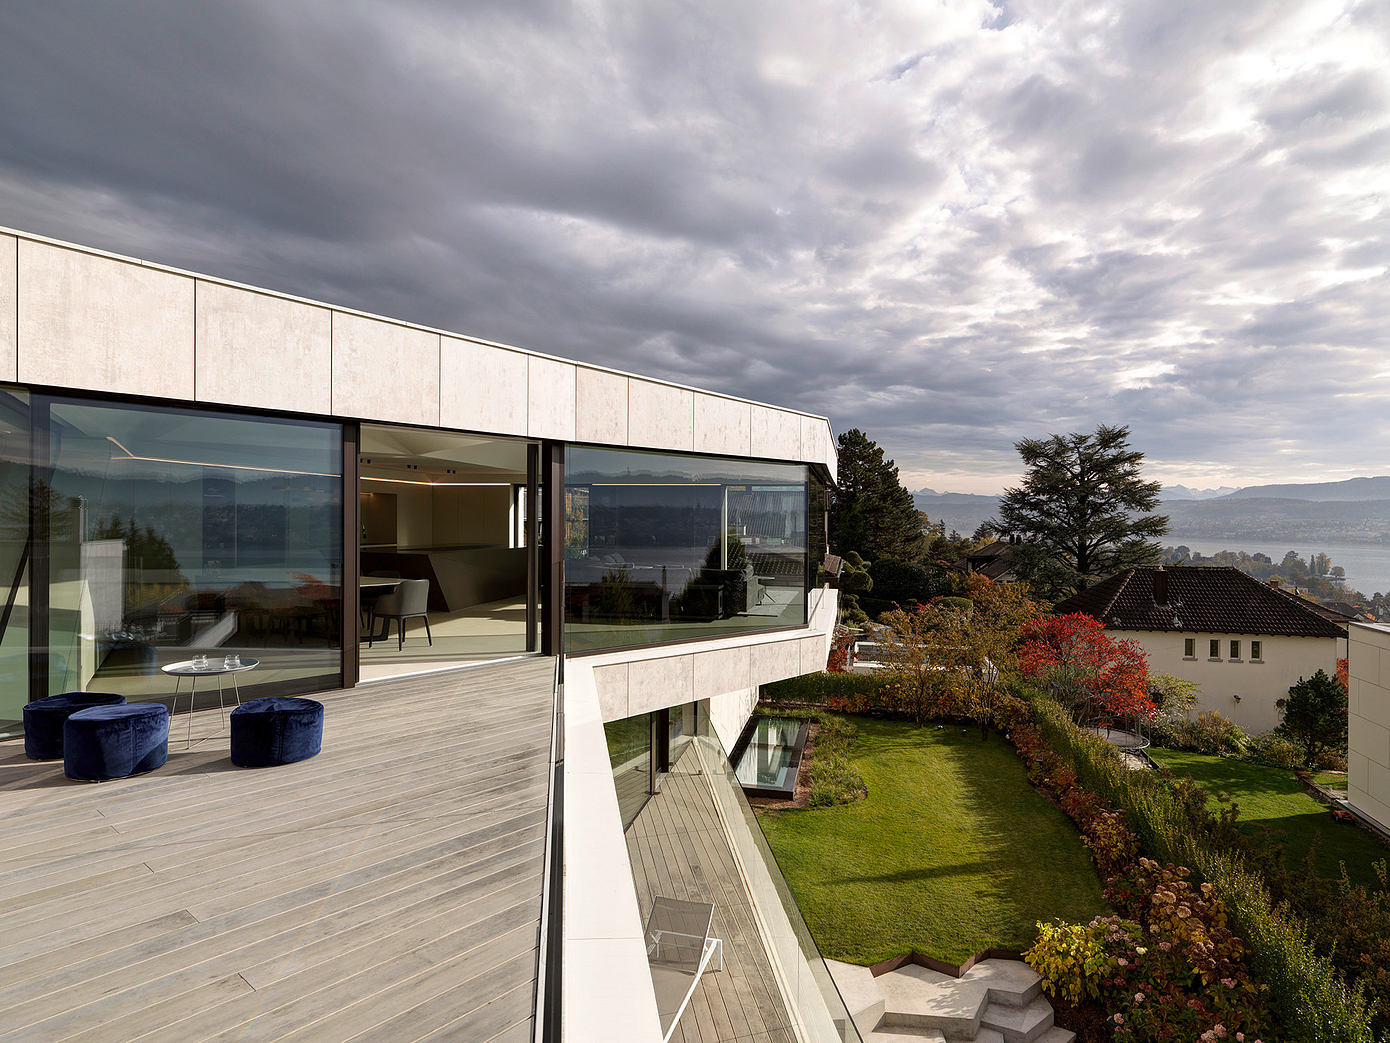 Casa Sil: Zurich Lake Retreat with Innovative Folded Design